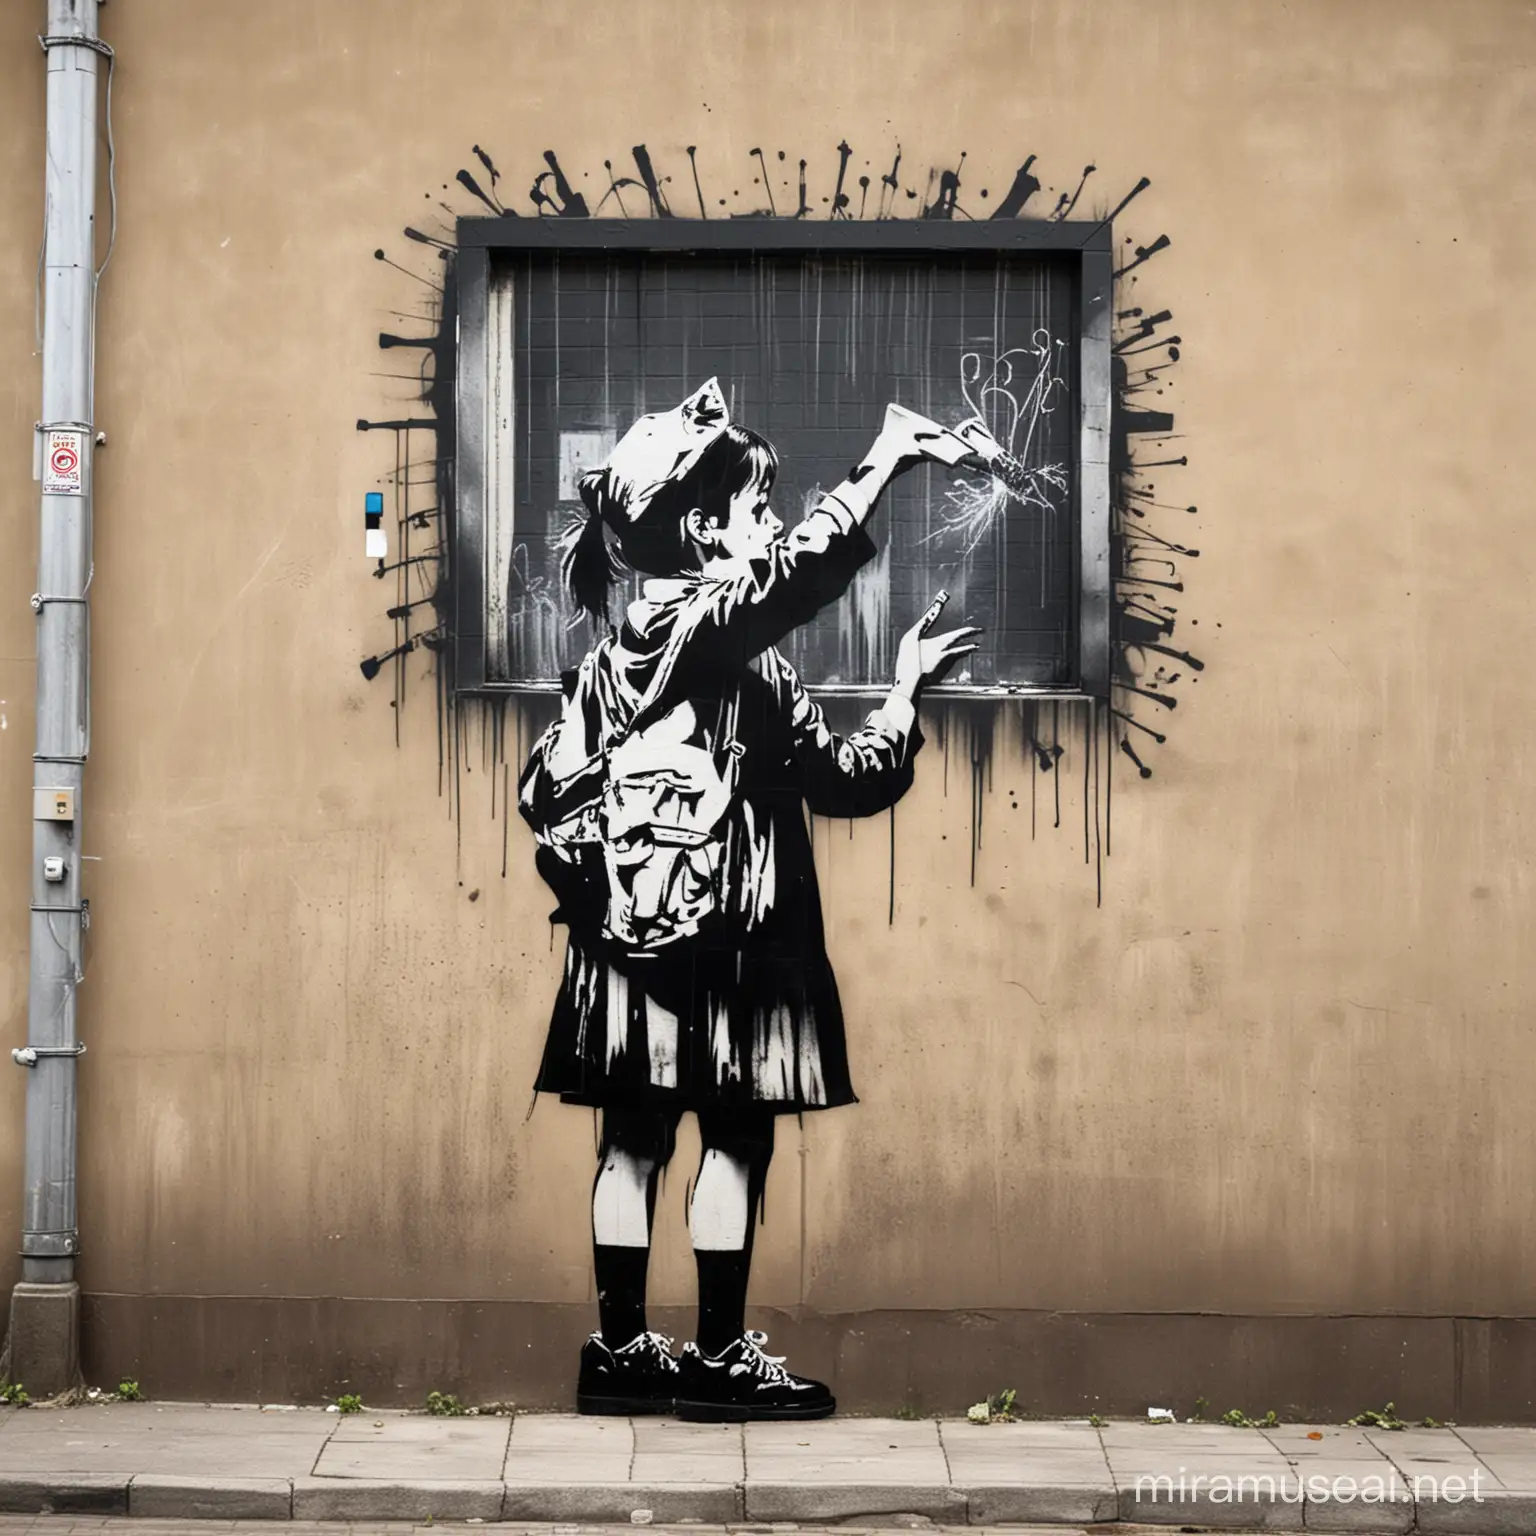 Urban Art BanksyInspired Graffiti Depicting School Struggles